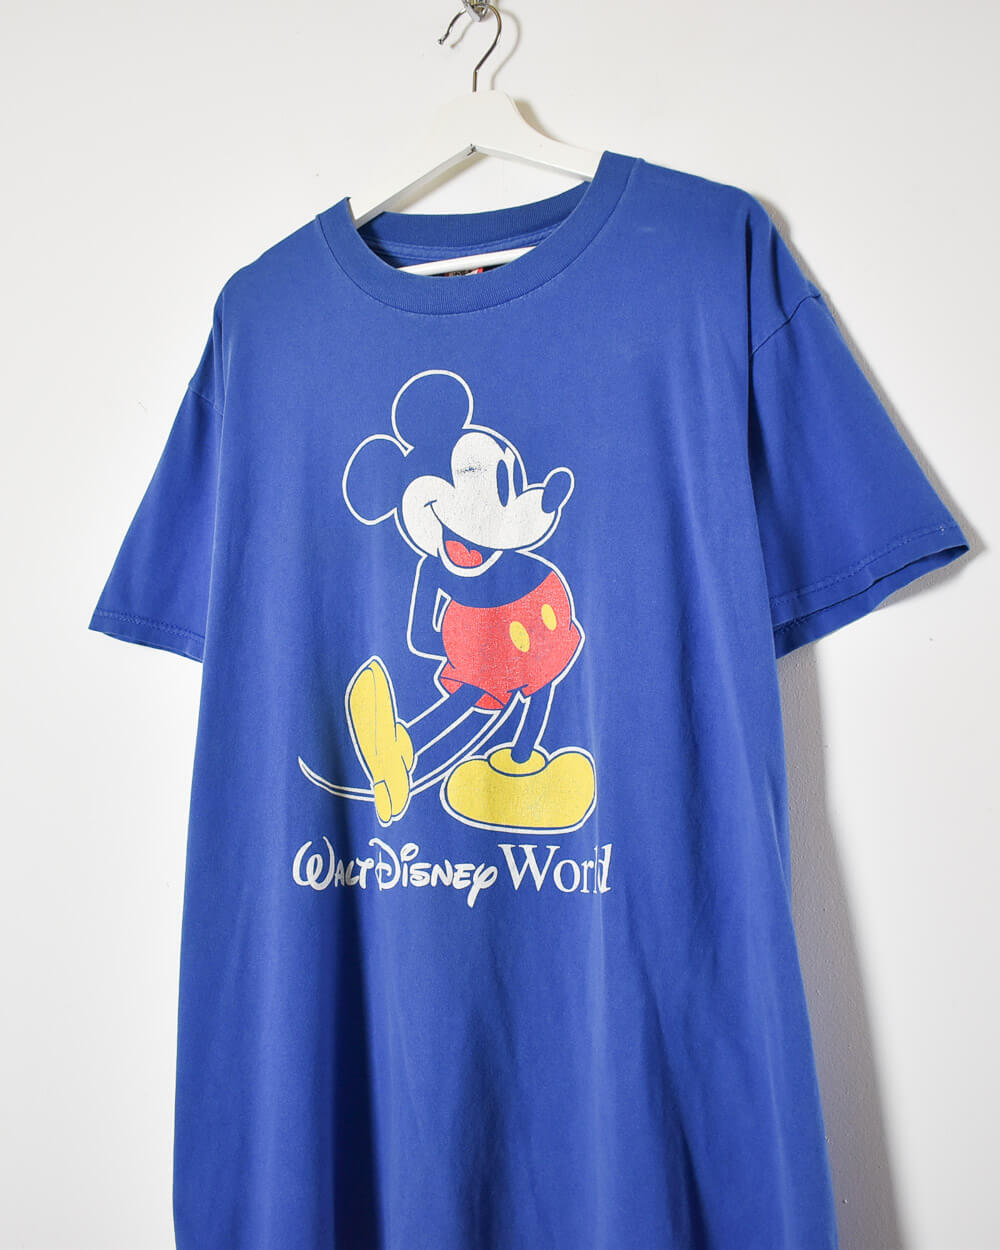 Blue Walt Disney World Designs T-Shirt - X-Large